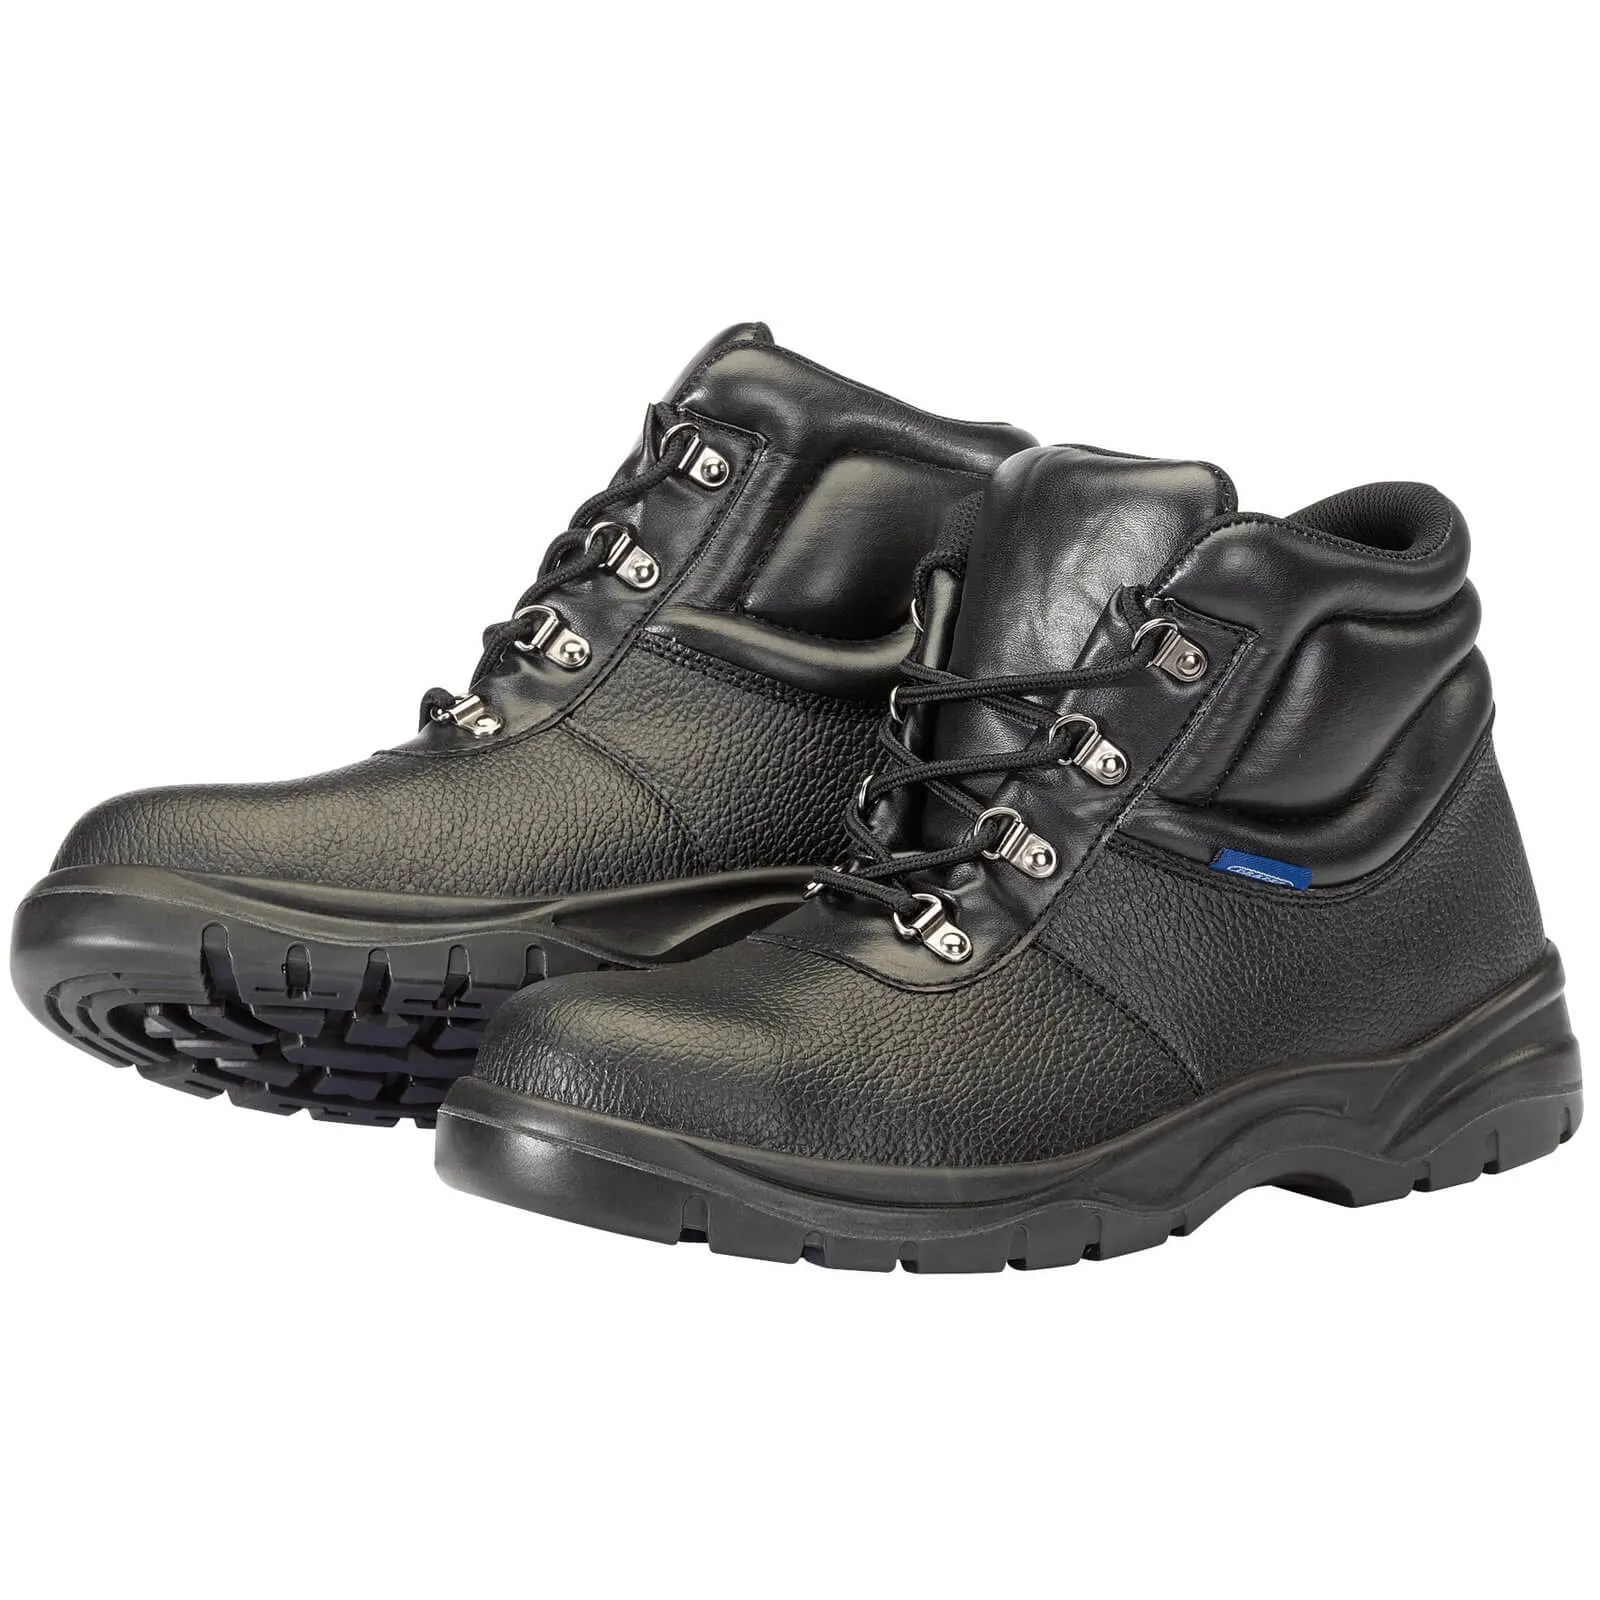 Draper Mens Chukka Style Safety Boots - Black, Size 11